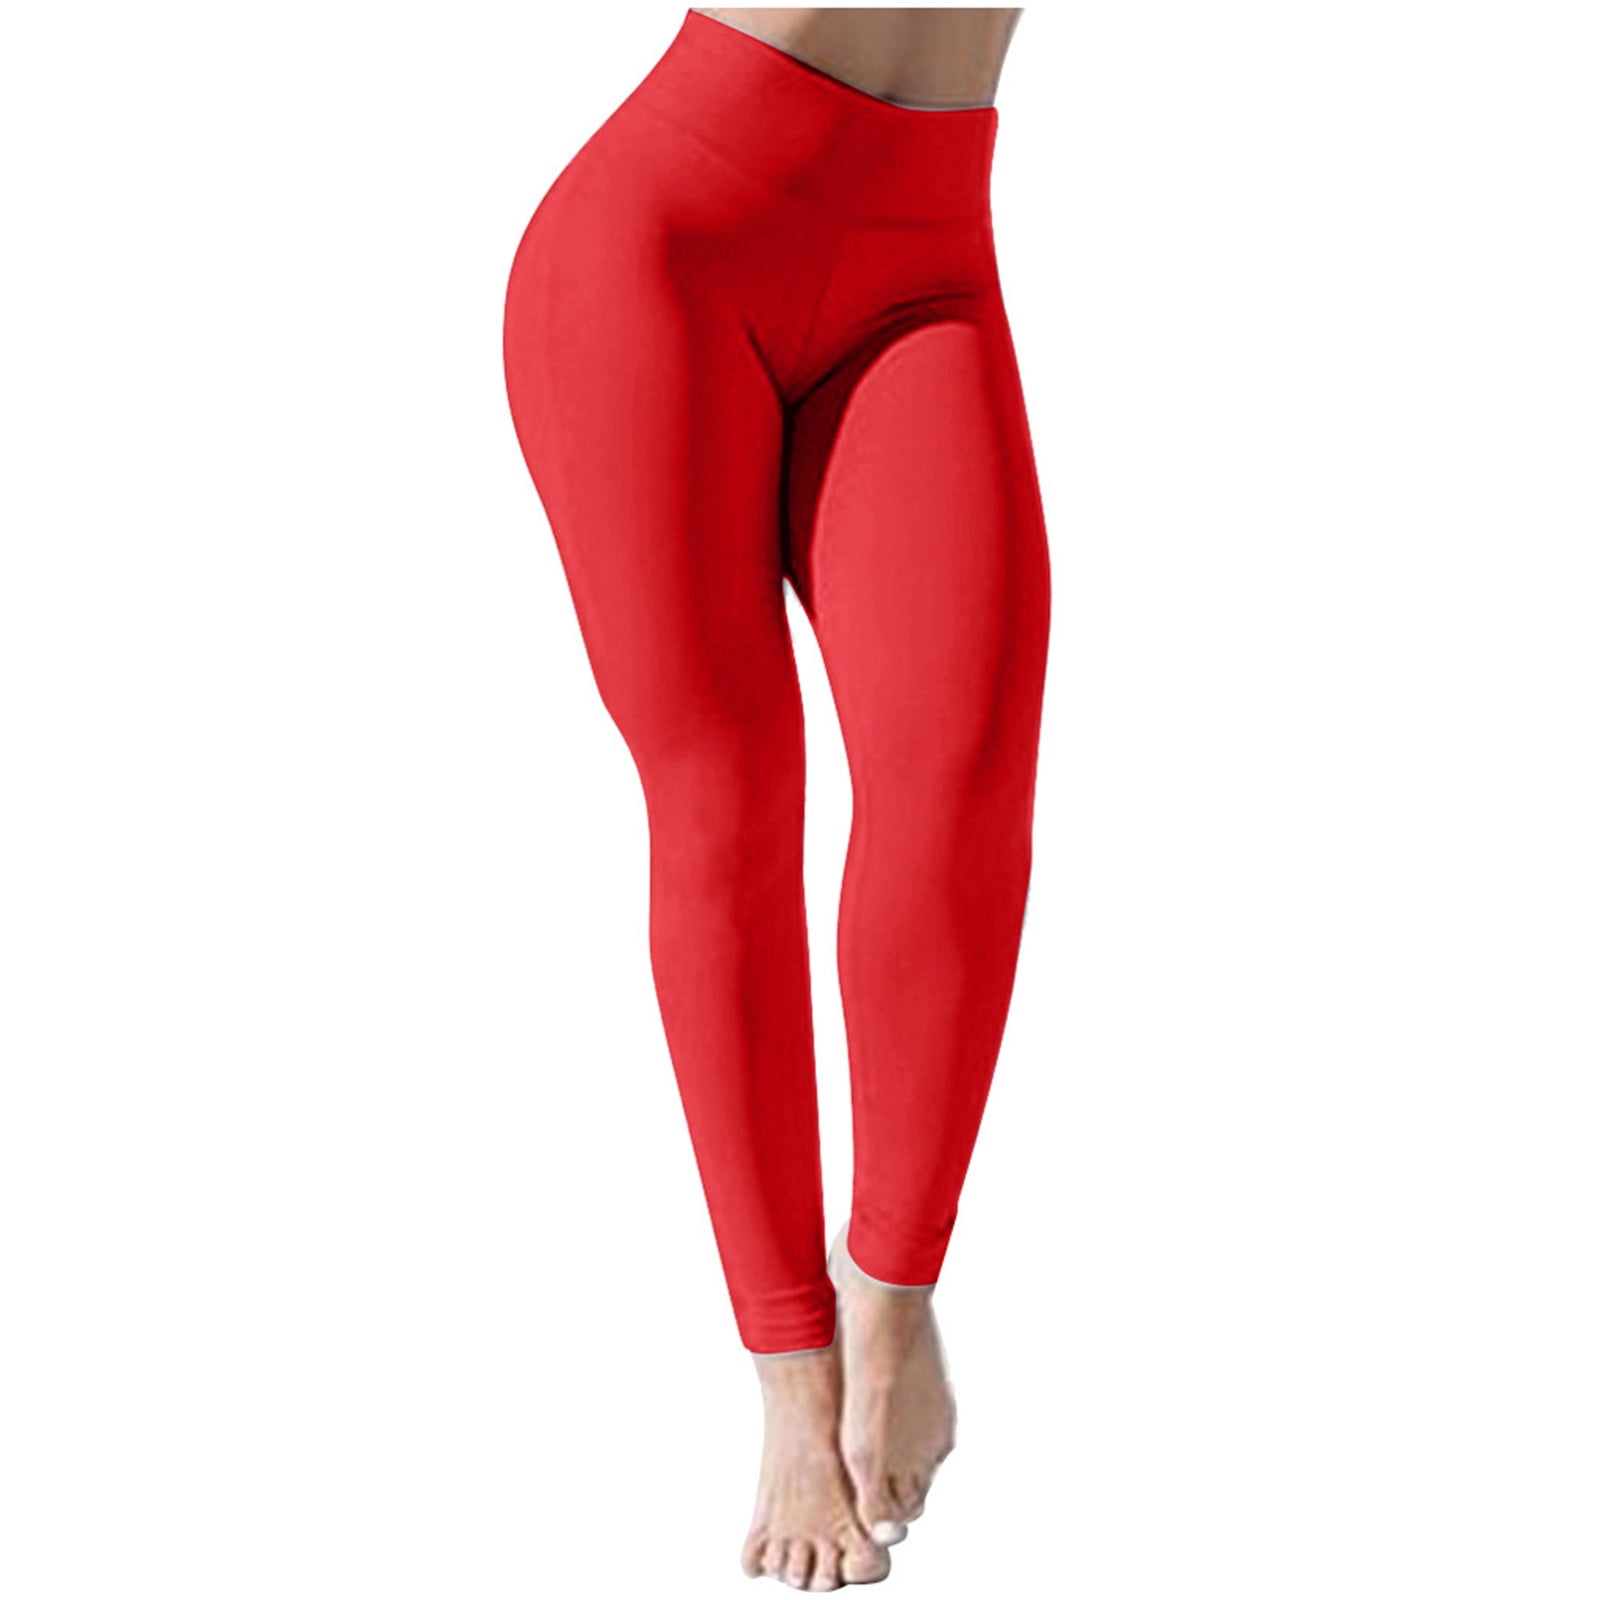 Amaping High Waist Yoga Pants for Women Tummy Control Yoga